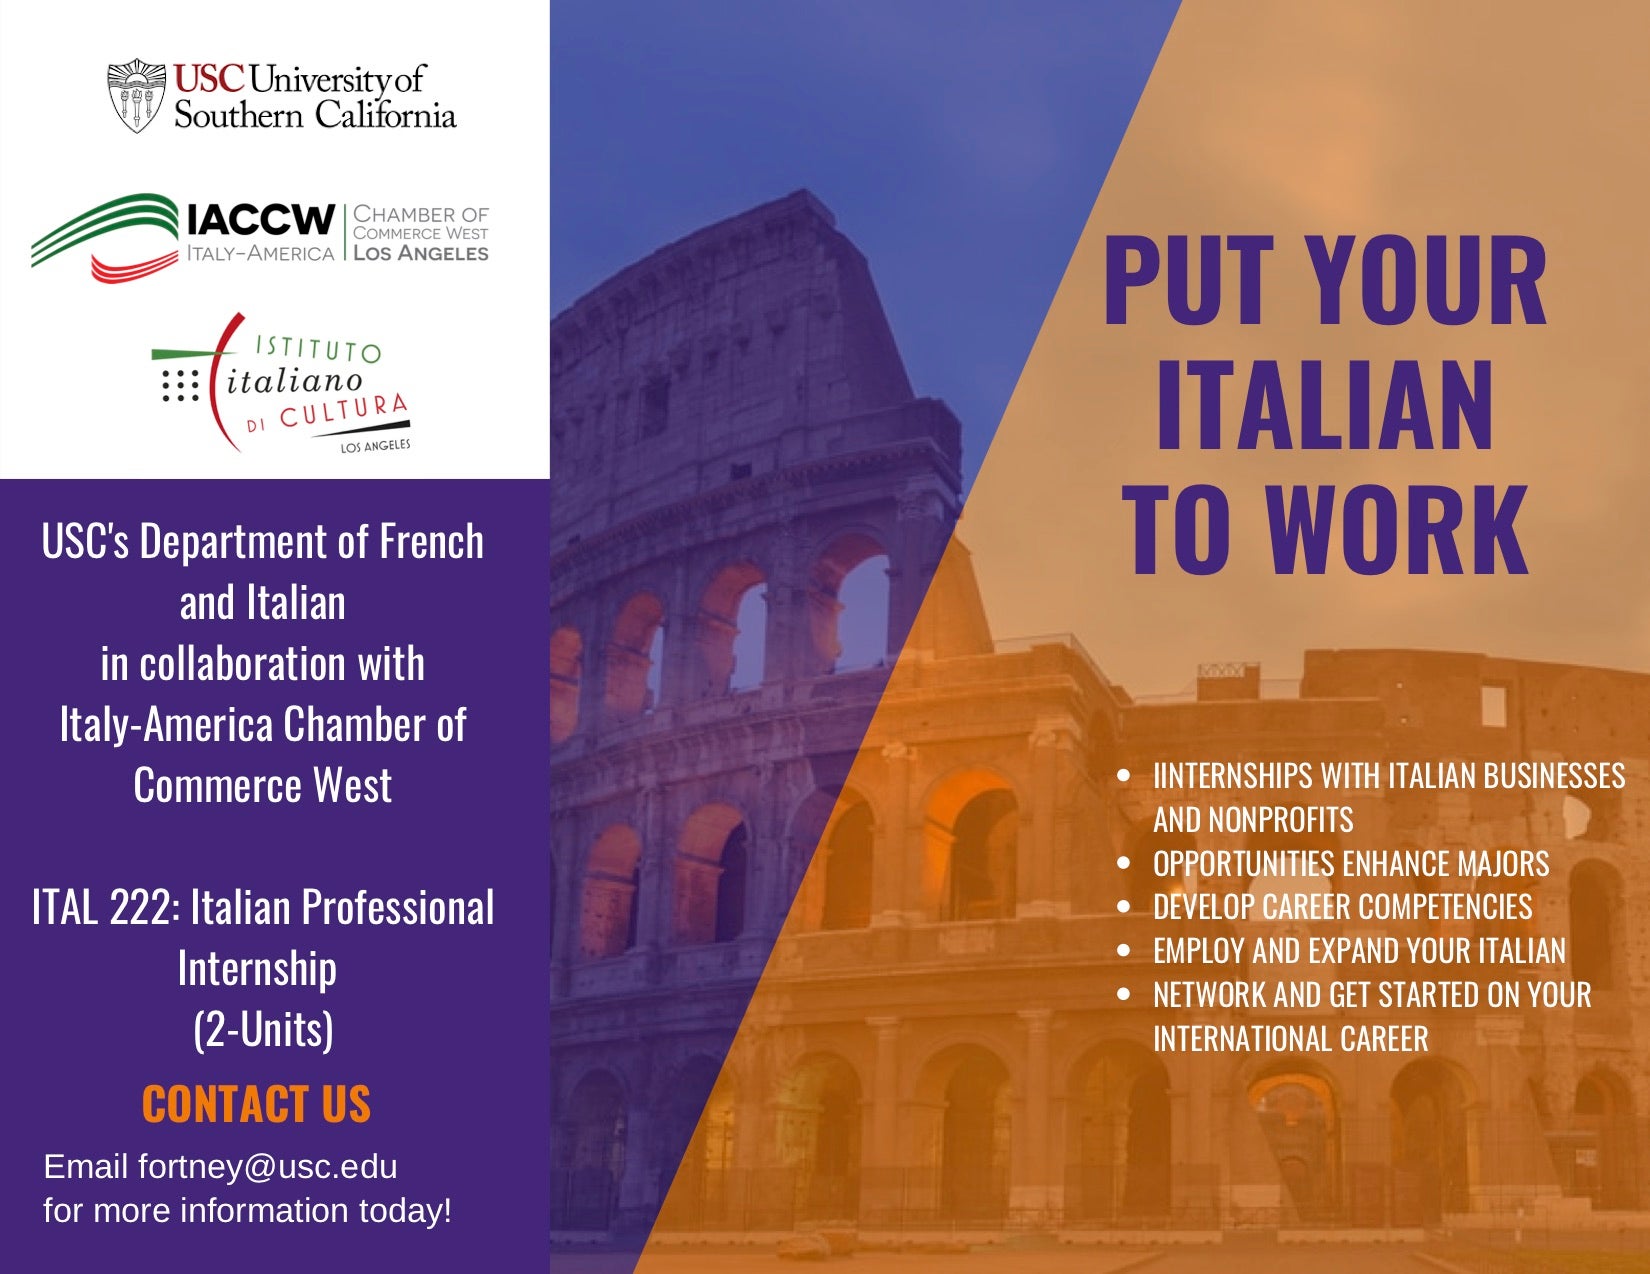 ITAL 222 and IACCW Italian Professional Internship